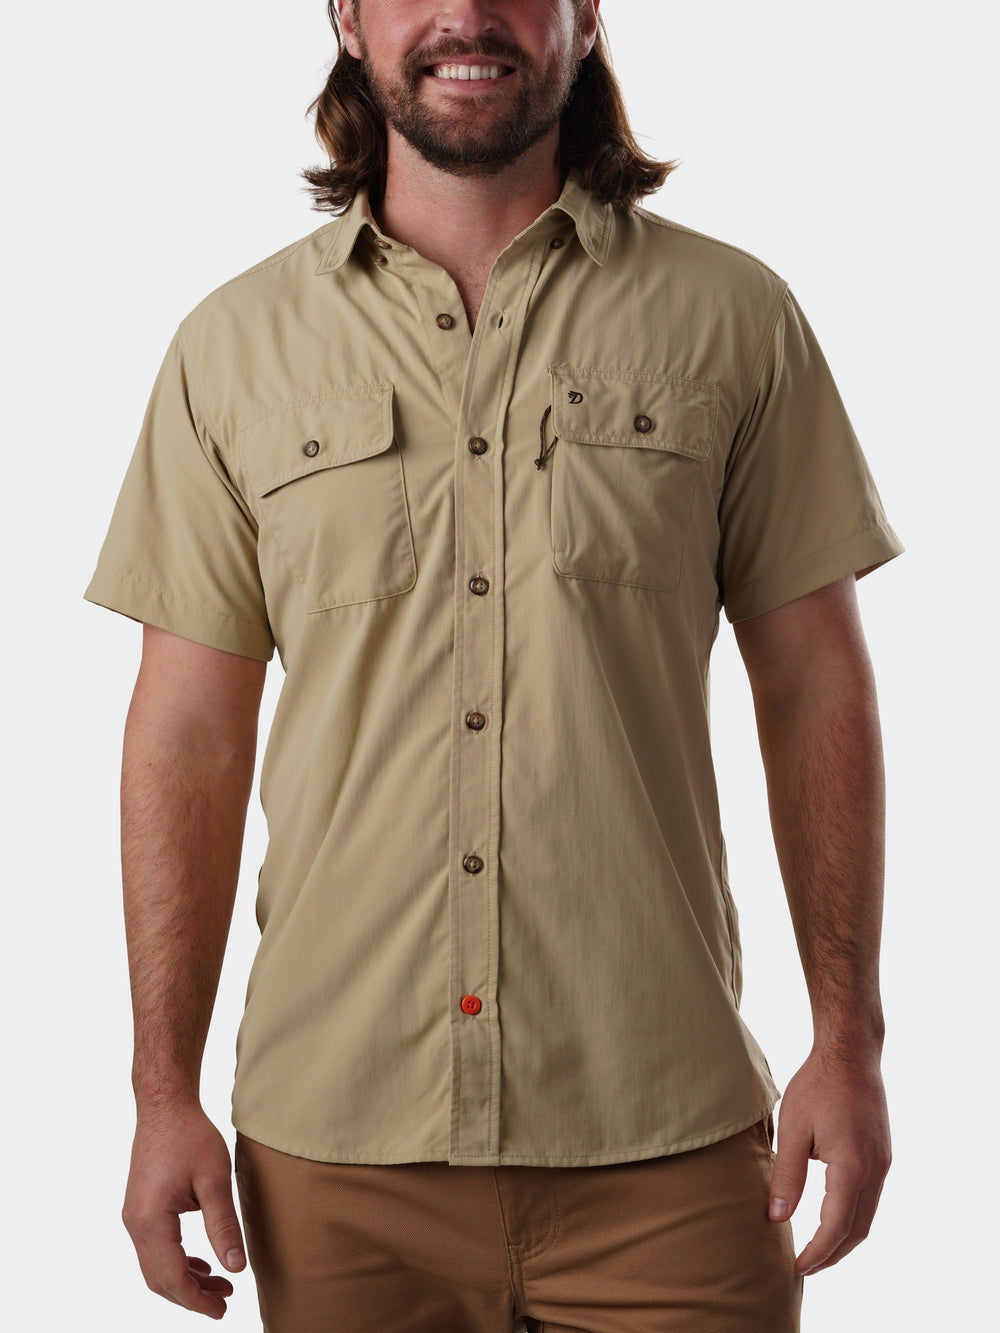 Men's Lightweight Hunting Shirt - Short Sleeve - Pumice